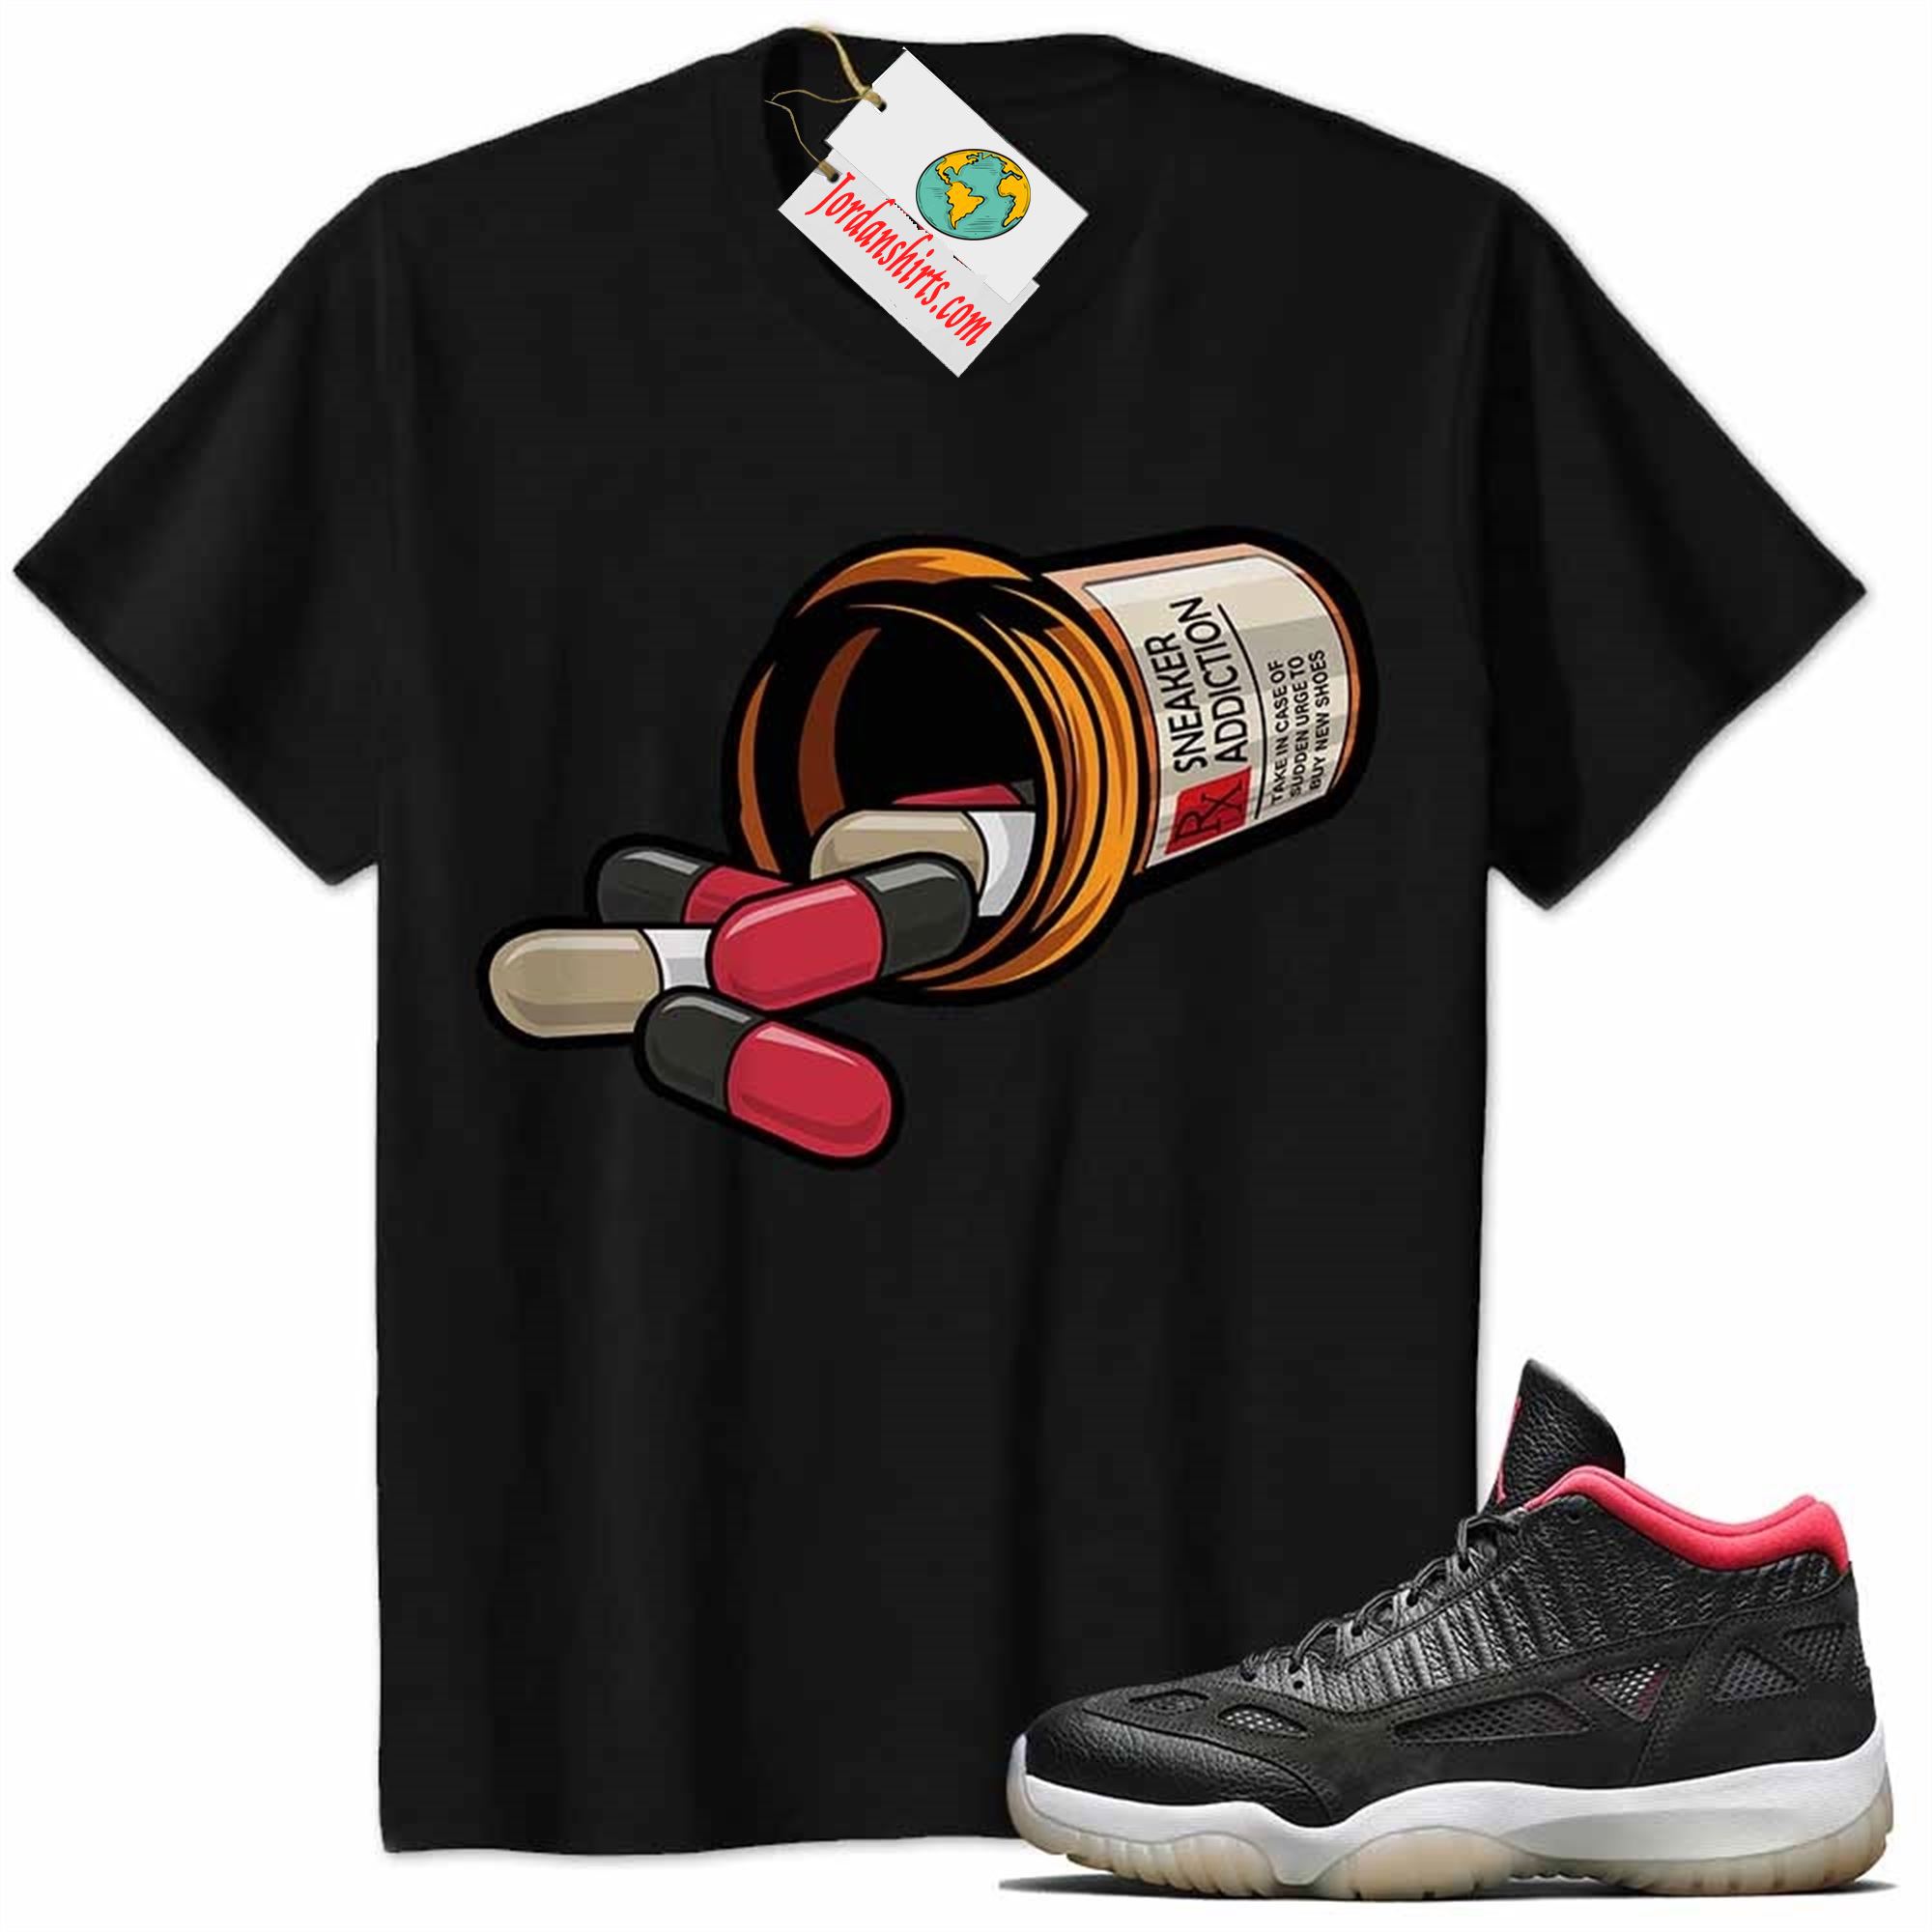 Jordan 11 Shirt, Rx Drugs Pill Bottle Sneaker Addiction Black Air Jordan 11 Bred 11s Full Size Up To 5xl